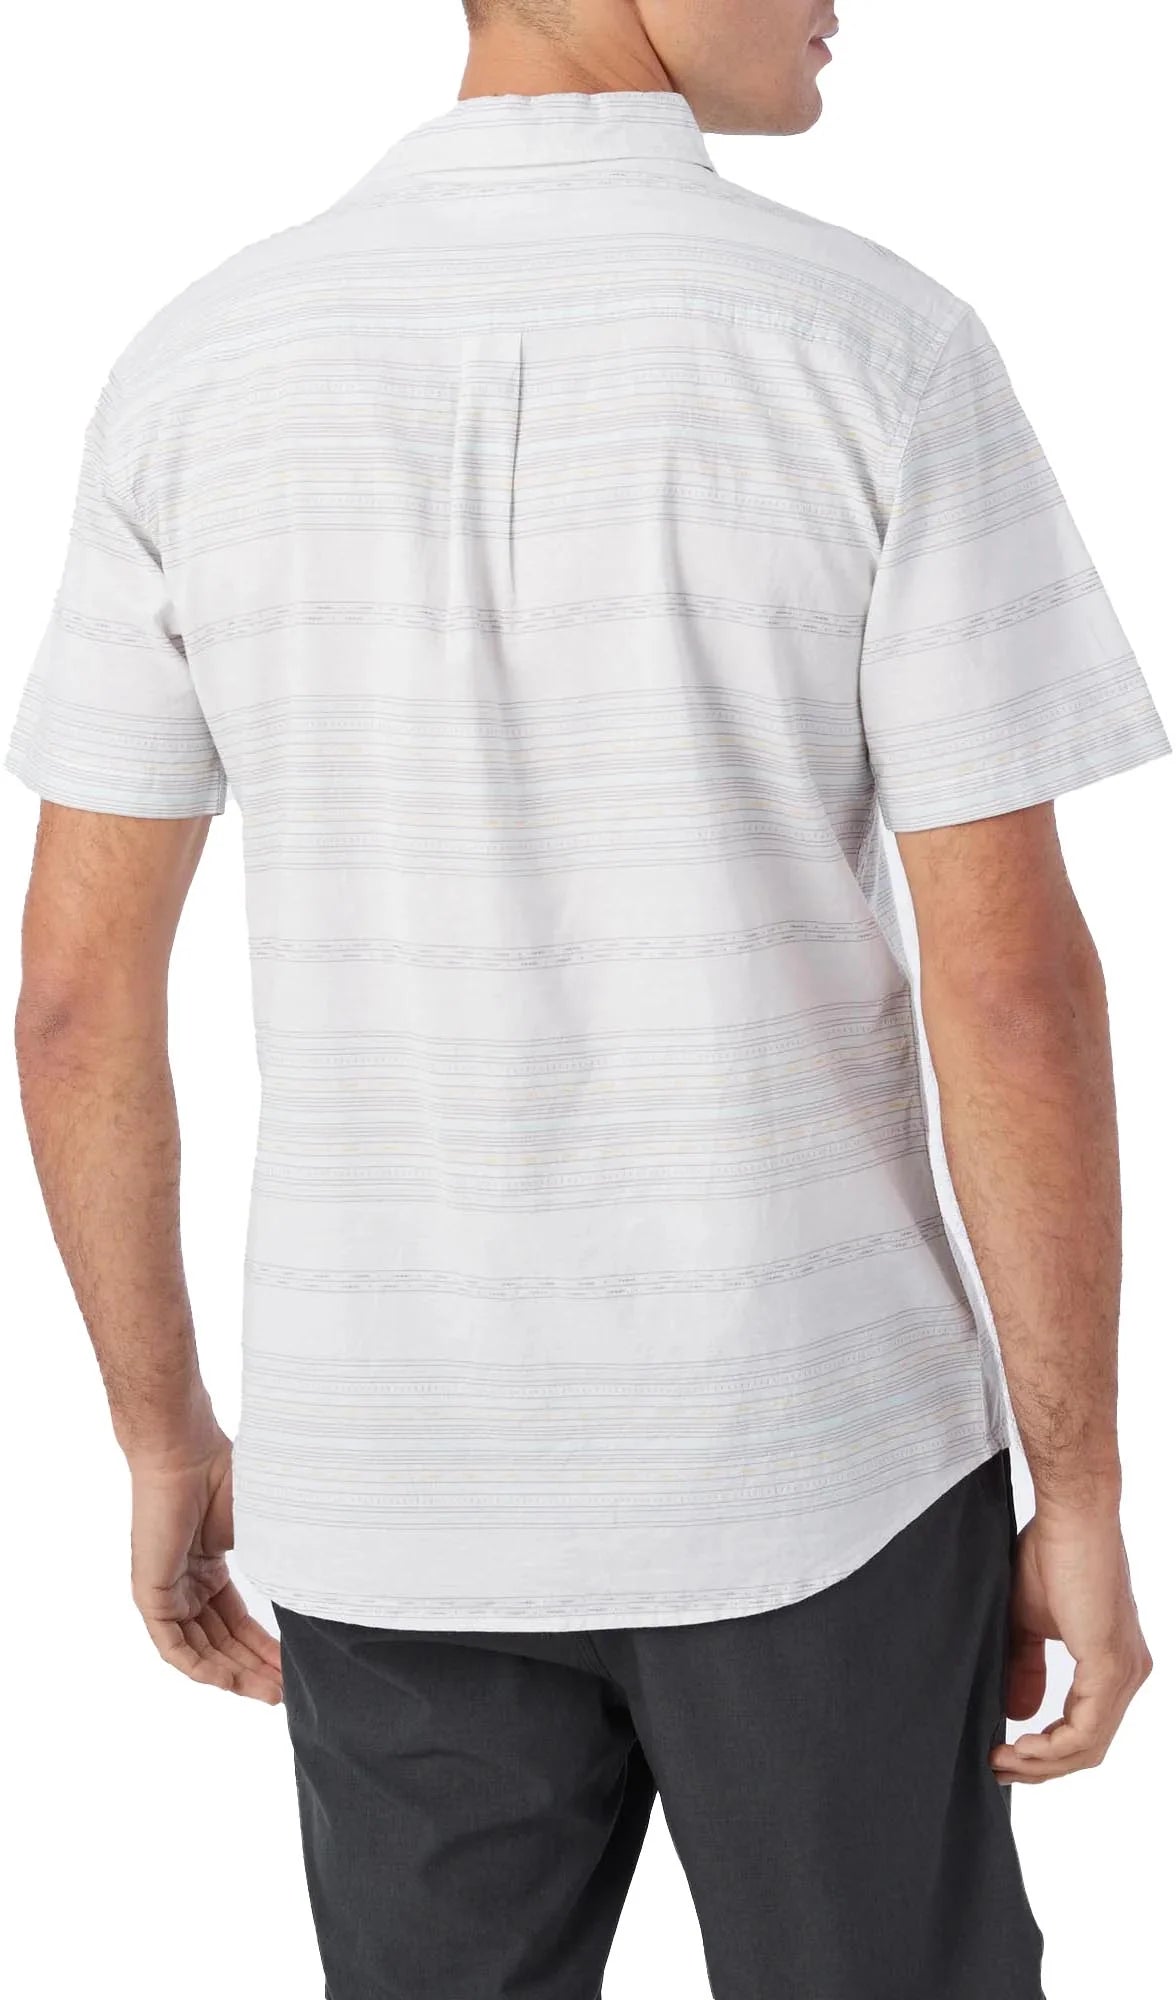 O'Neill Men's Seafaring Stripe Short Sleeve Standard Shirt